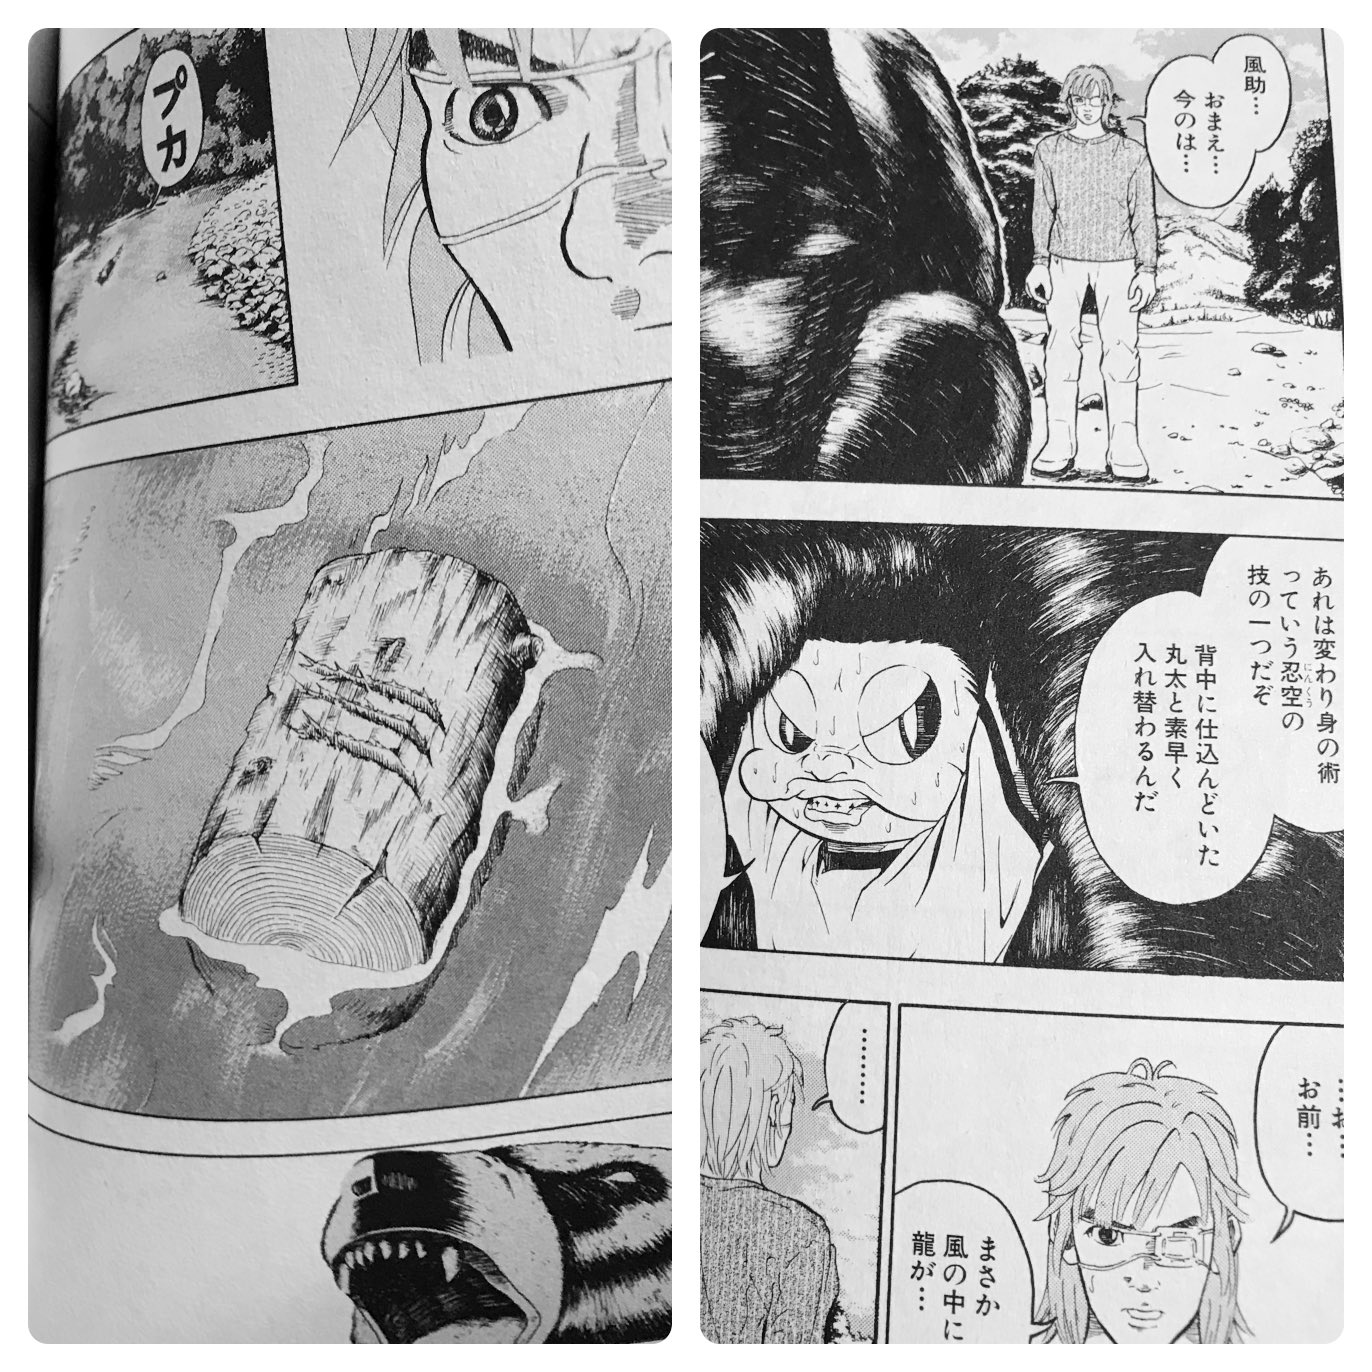 𝗰𝗵𝗶𝘆𝘂 Naruto Boruto 忍空 数年ぶりに読んでる 忍術etc 空圧拳っての螺旋丸に ﾁｮｯﾄ似てるんだなコレ 岸本先生は忍空に影響を受け Naruto を描いたとか 違ってたらｺﾞﾒﾝﾅｻｲ 忍空読んでからnarutoに ハマった やぱ忍空面白い T Co